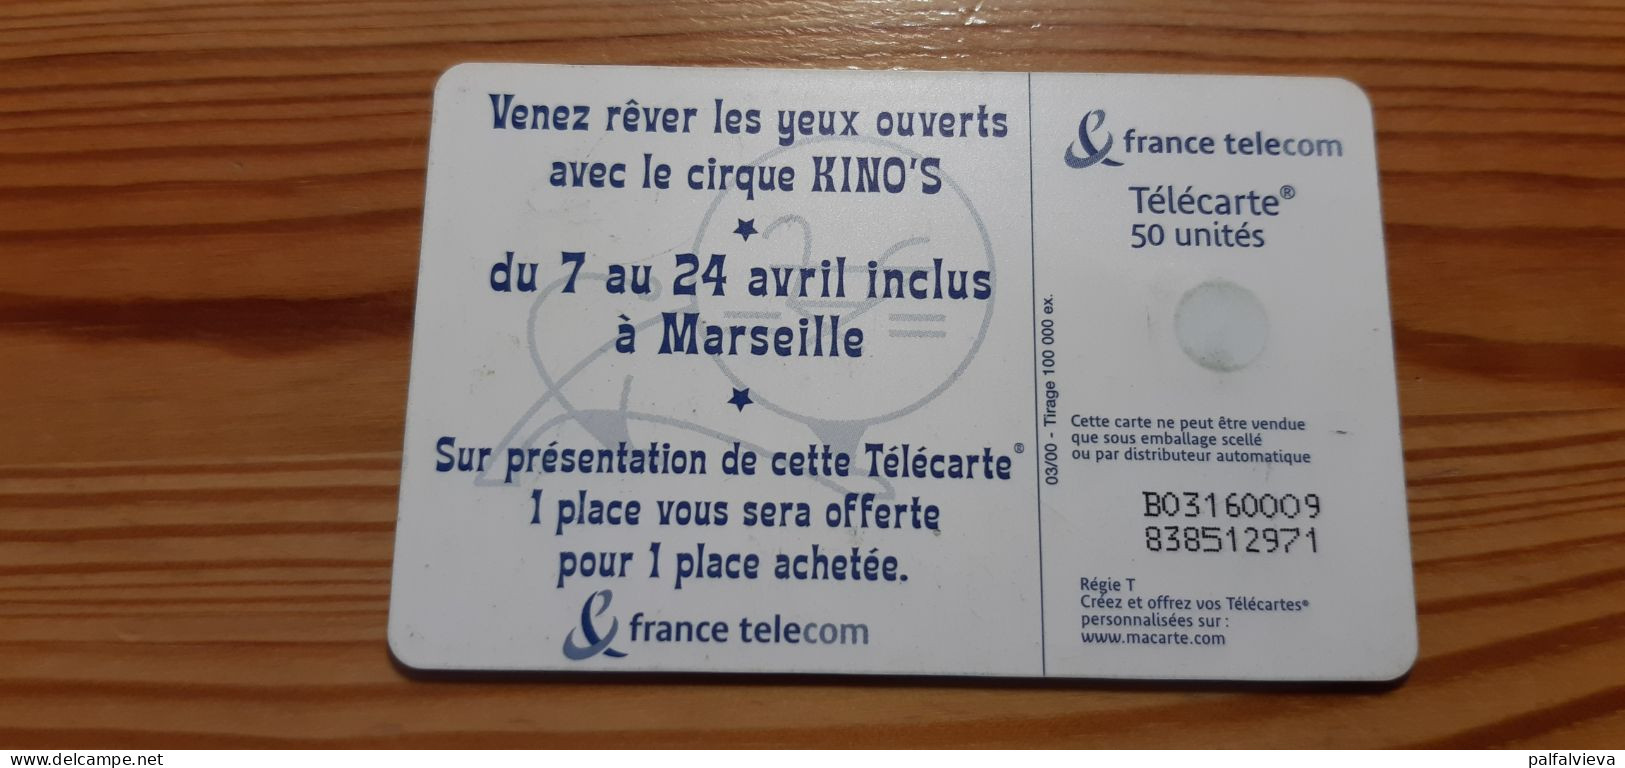 Phonecard France  - Kino's, Circus, Clown, Tiger, Elephant - 2000